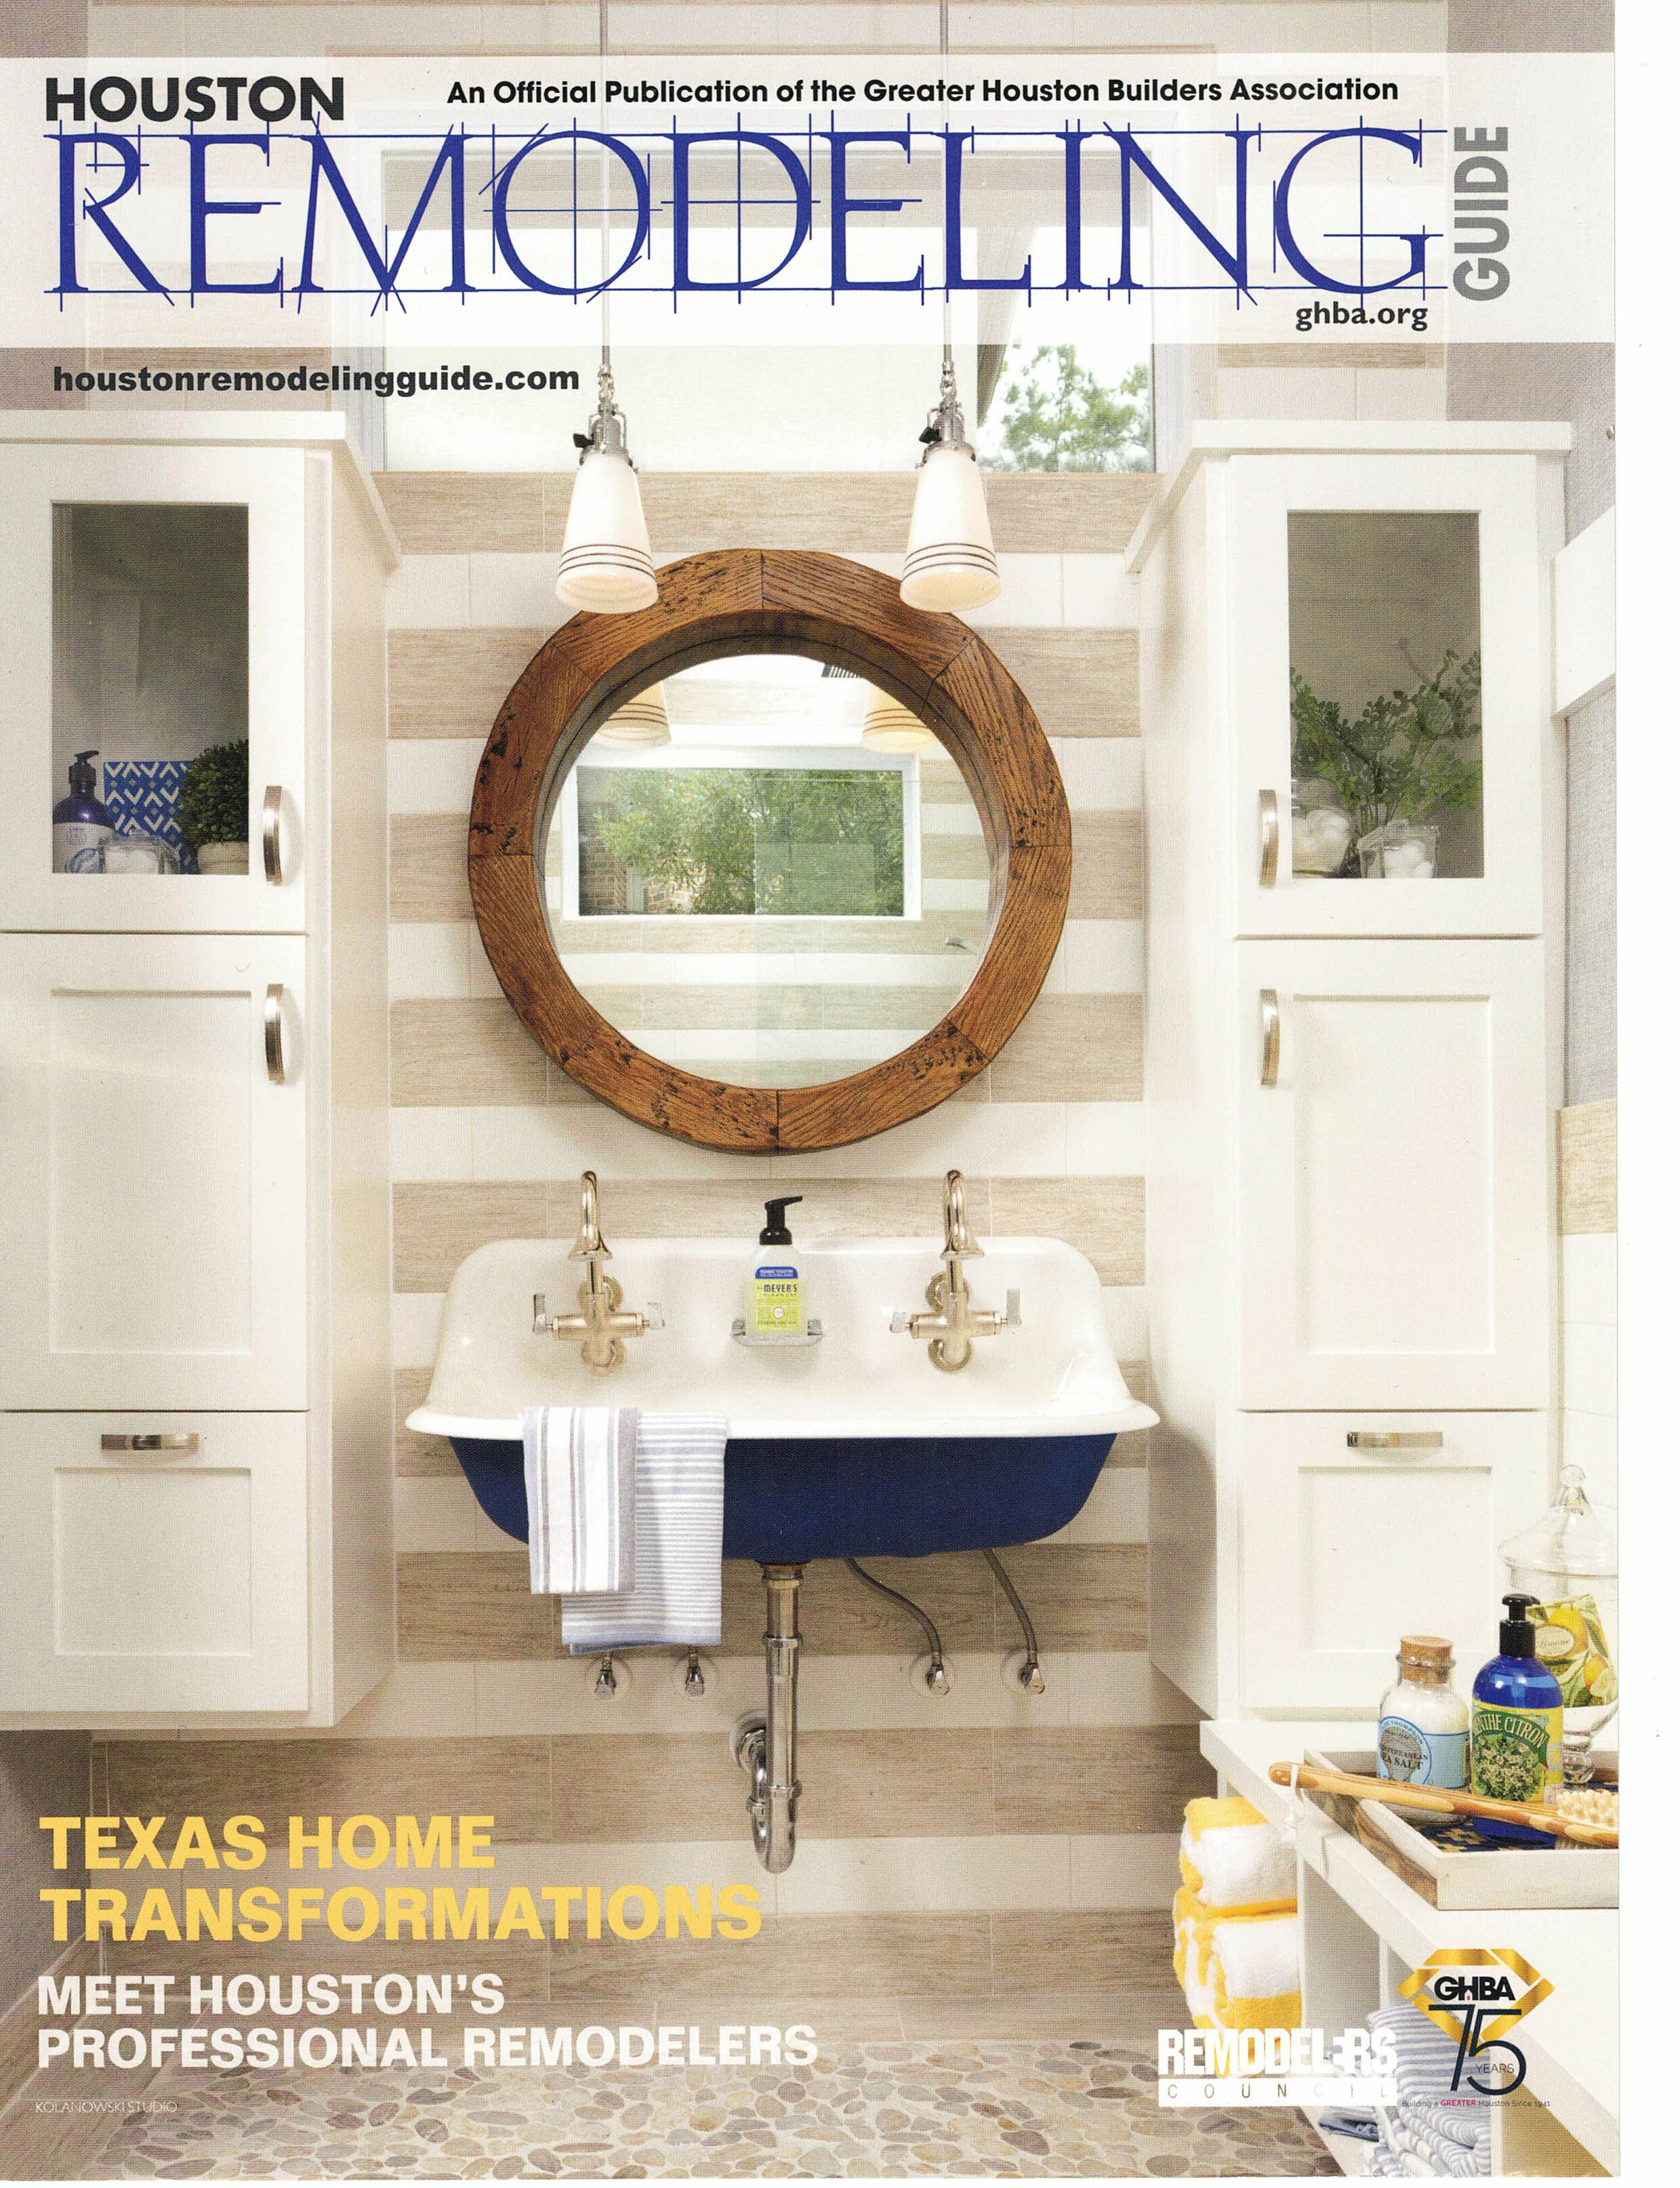 Houston Remodeling Guide TX Home 1 cover.jpg